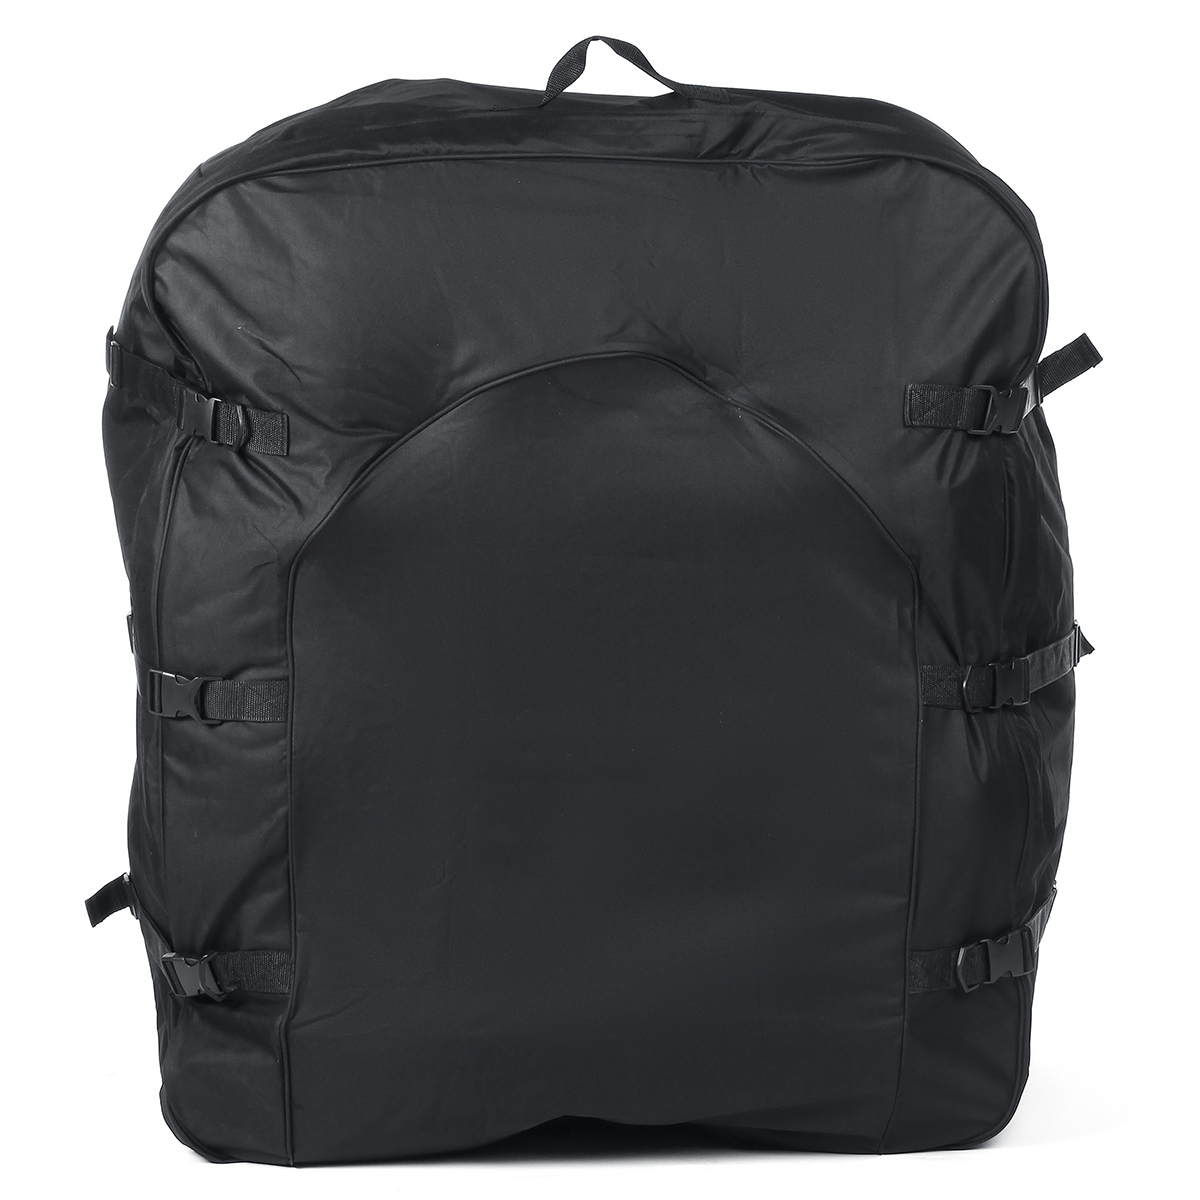 Portable-Travel-Storage-Bag-Waterproof-Car-SUV-Roof-Top-Rack-Bag-600D-Oxford-Travel-Luggage-Storage--1812090-6